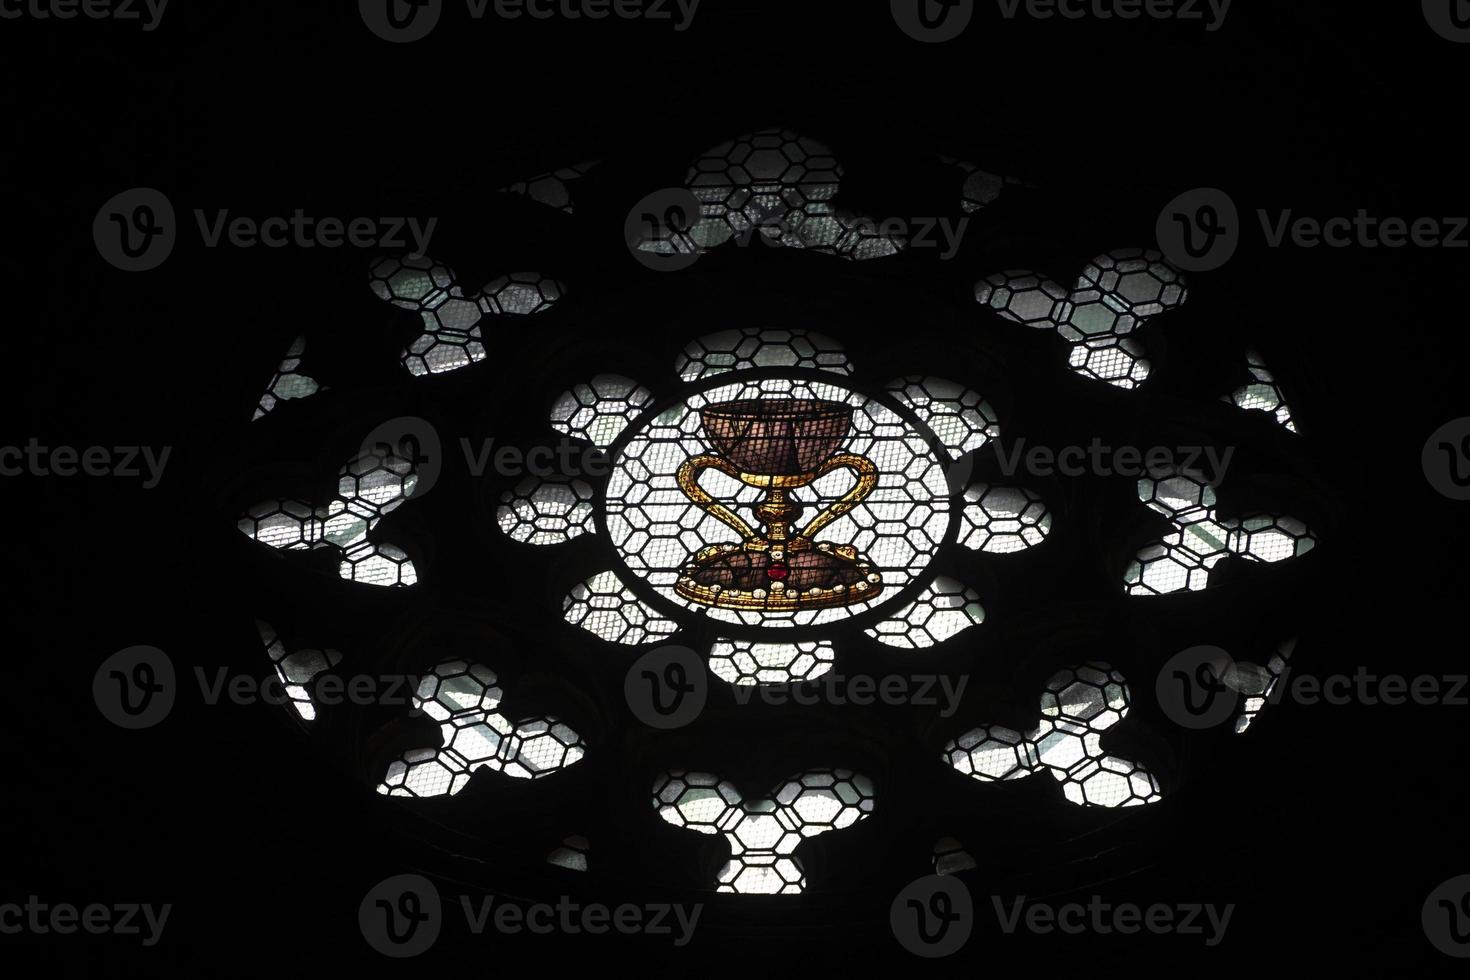 valencia spanien gotische kathedrale kirche foto